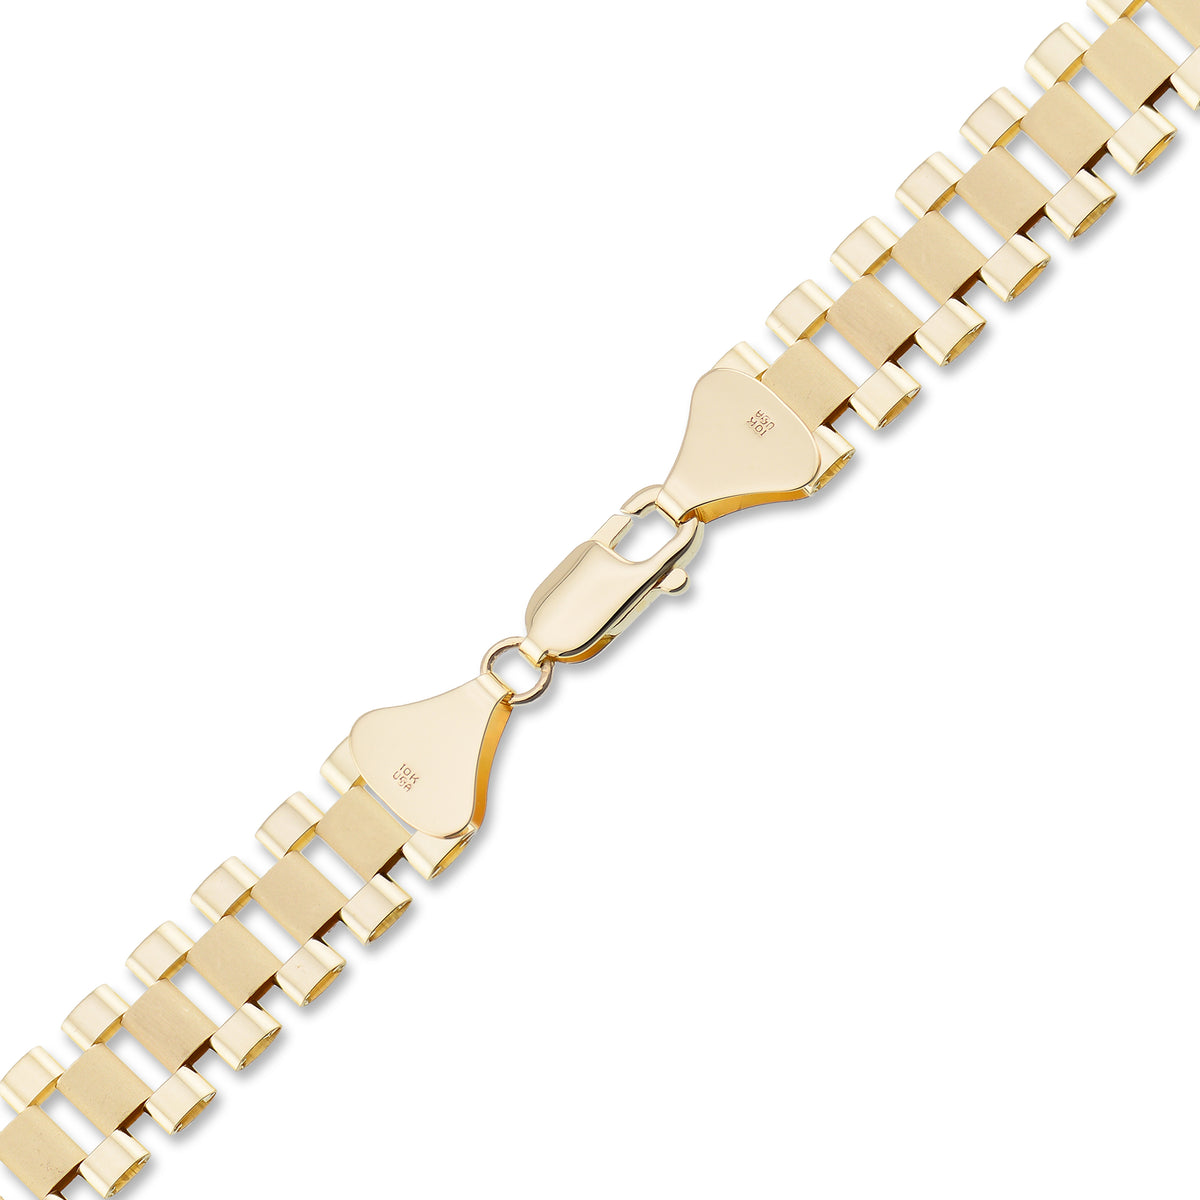 10K Solid Real Gold 12 mm Presidential Watch Band Style Hip Hop Bracelet or Anklet